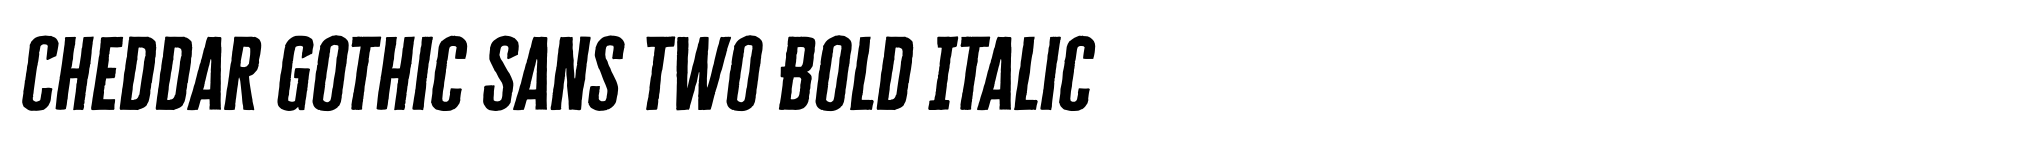 Cheddar Gothic Sans Two Bold Italic image